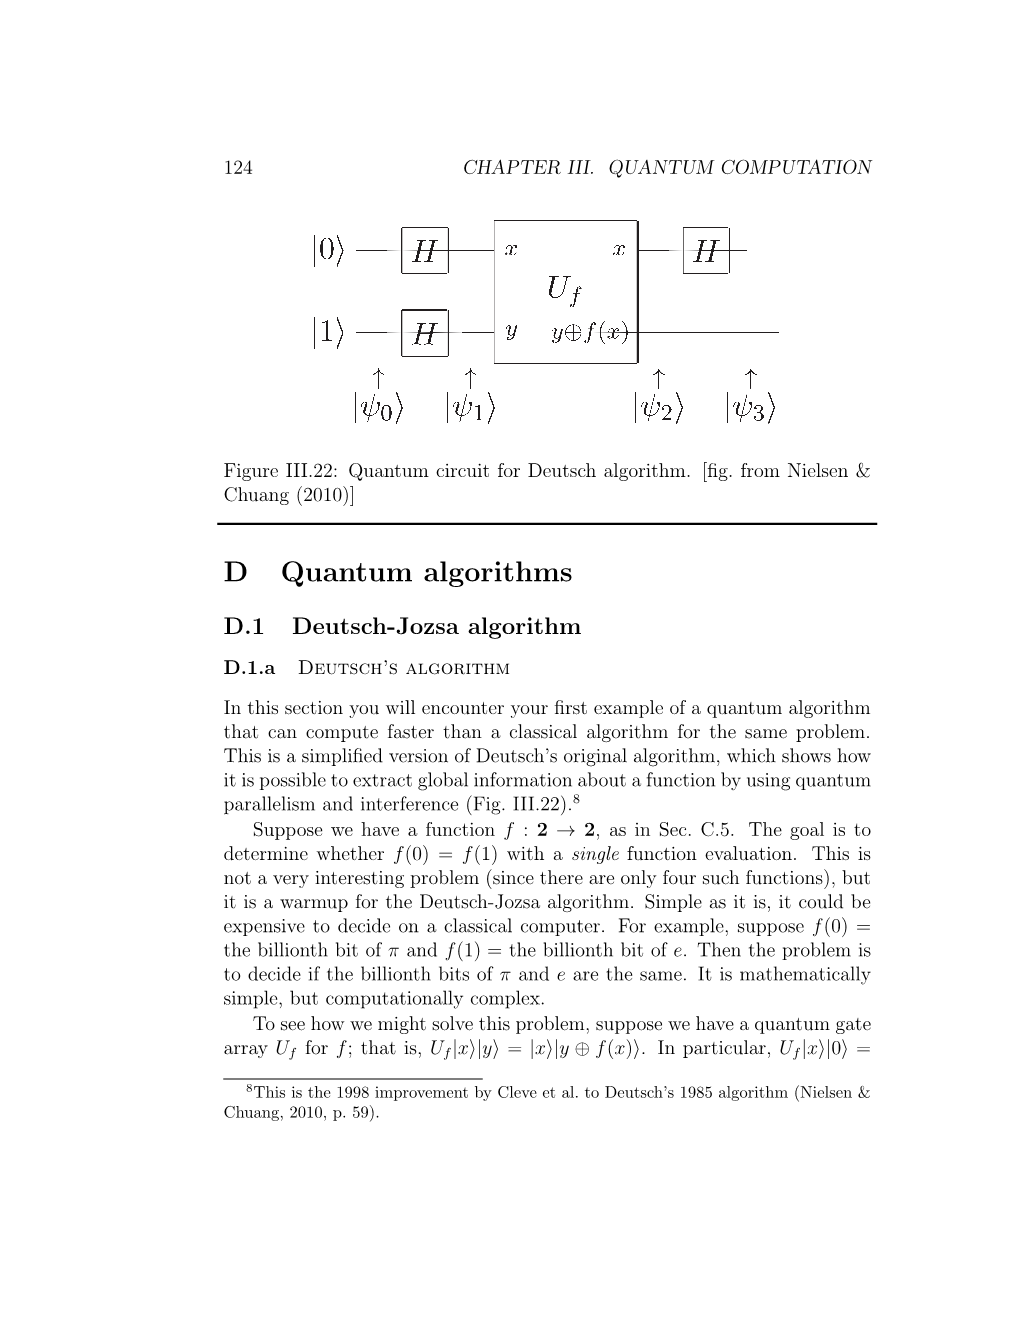 D Quantum Algorithms